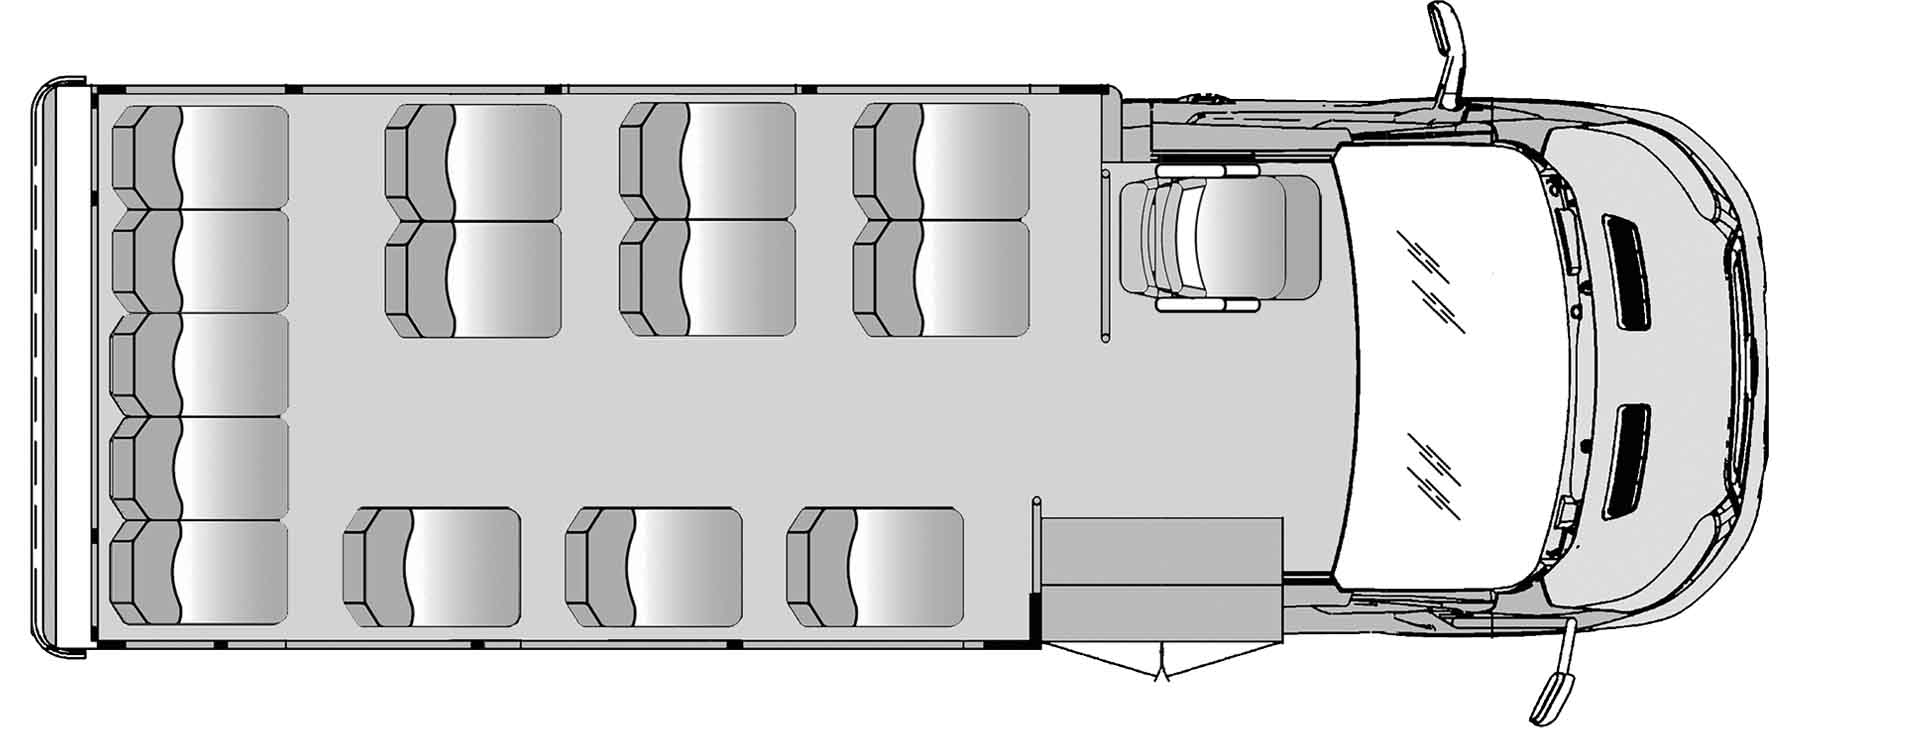 14 Passenger Plus Driver Floorplan Image